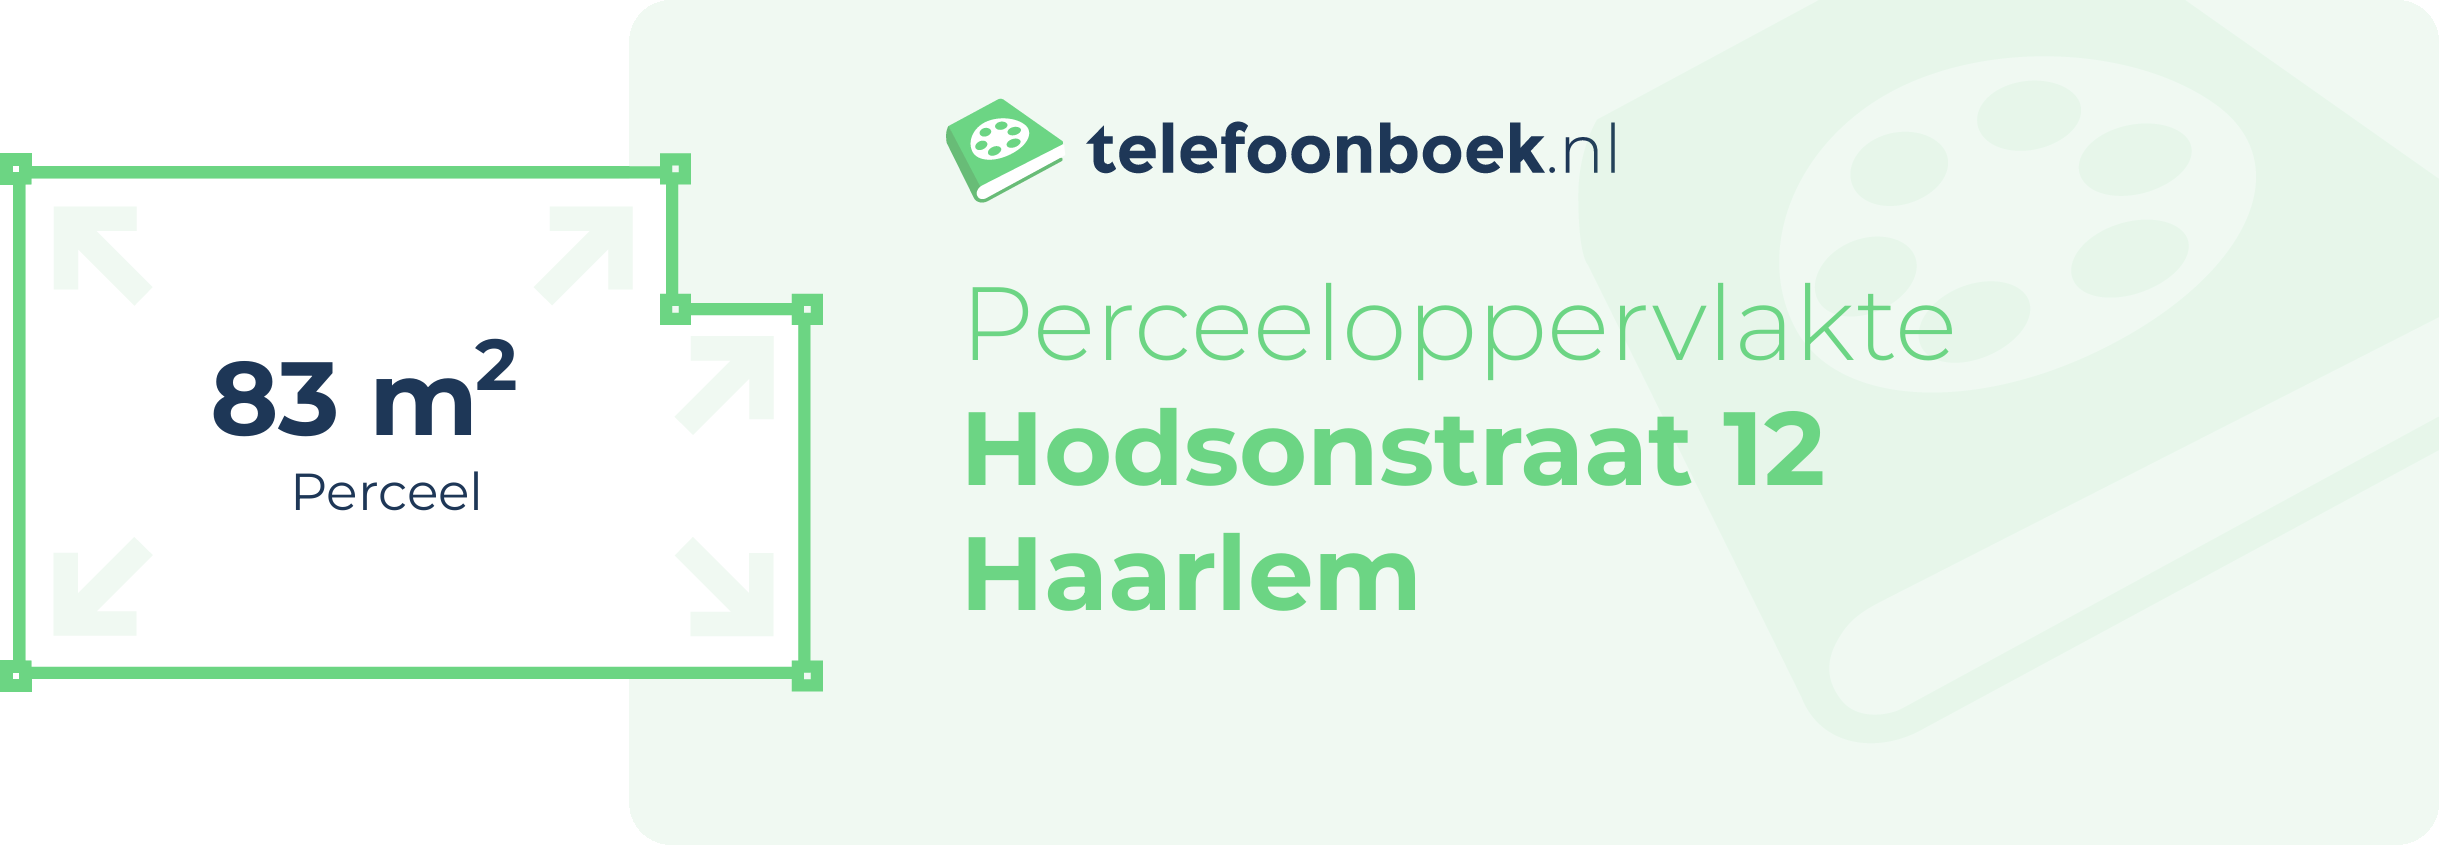 Perceeloppervlakte Hodsonstraat 12 Haarlem